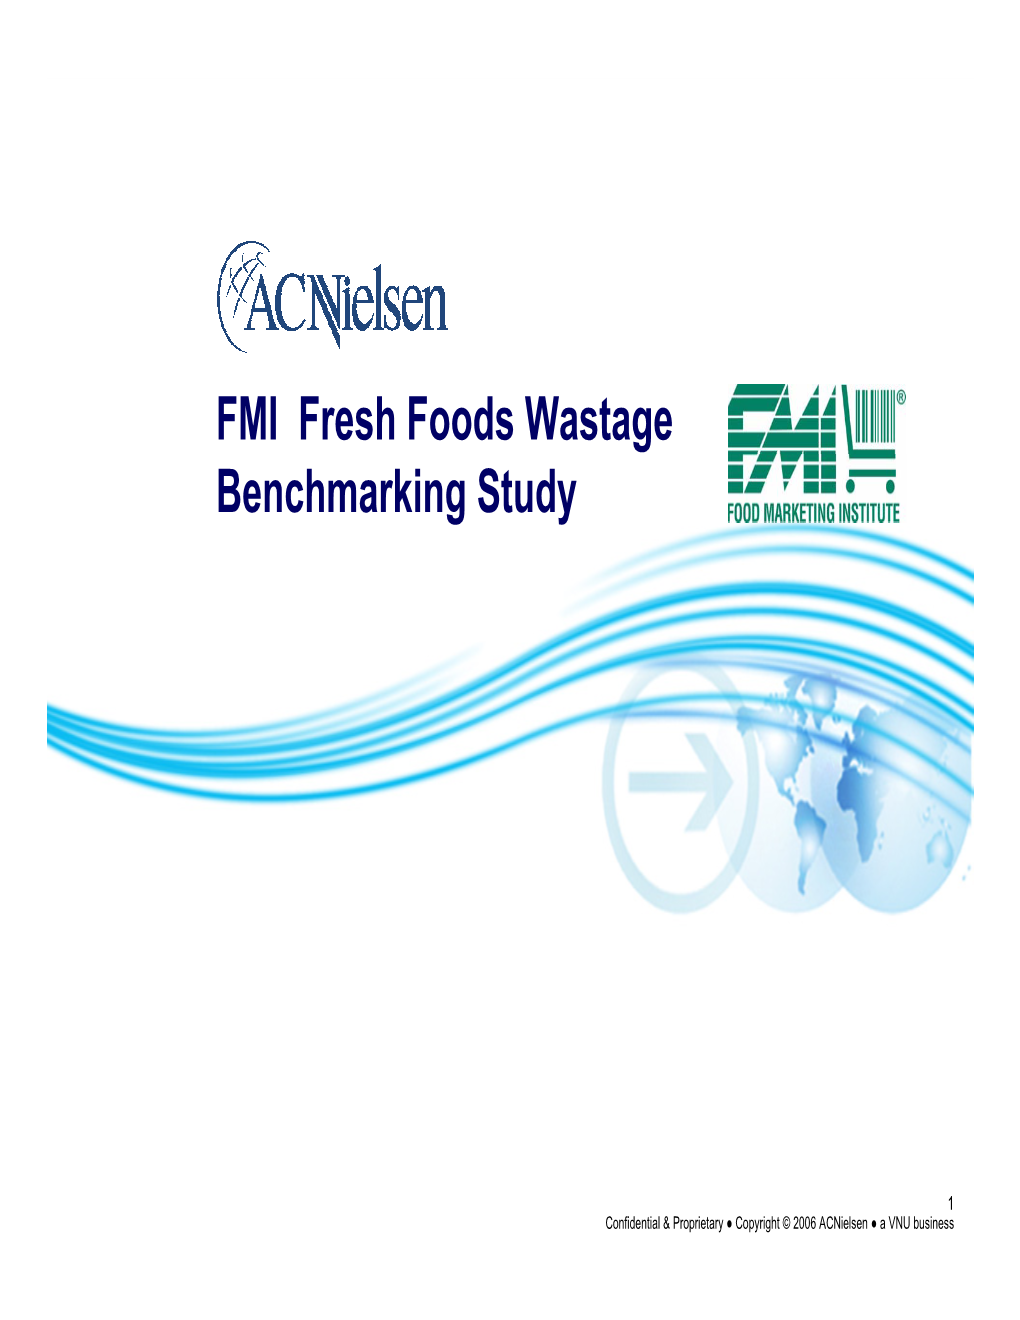 FMI Fresh Foods Wastage Benchmarking Study